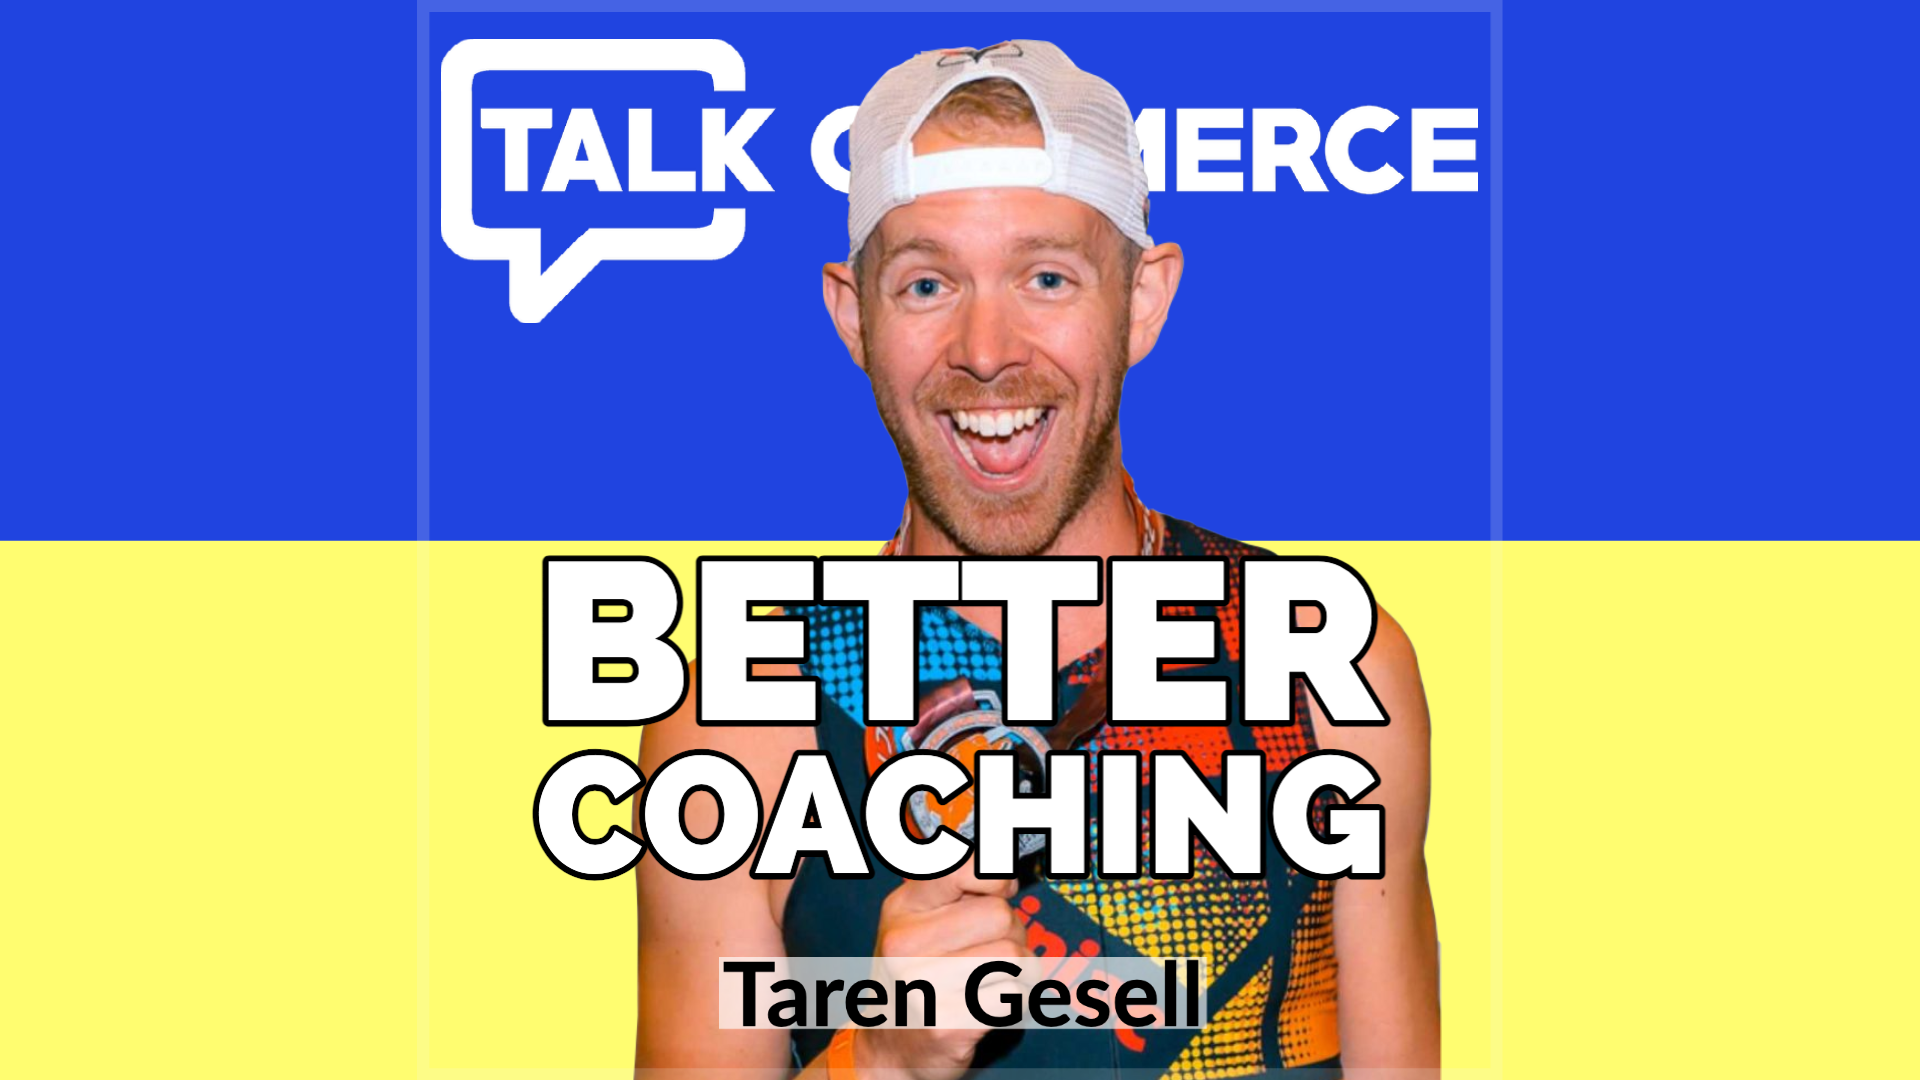 Talk-Commerce Taren Gesell